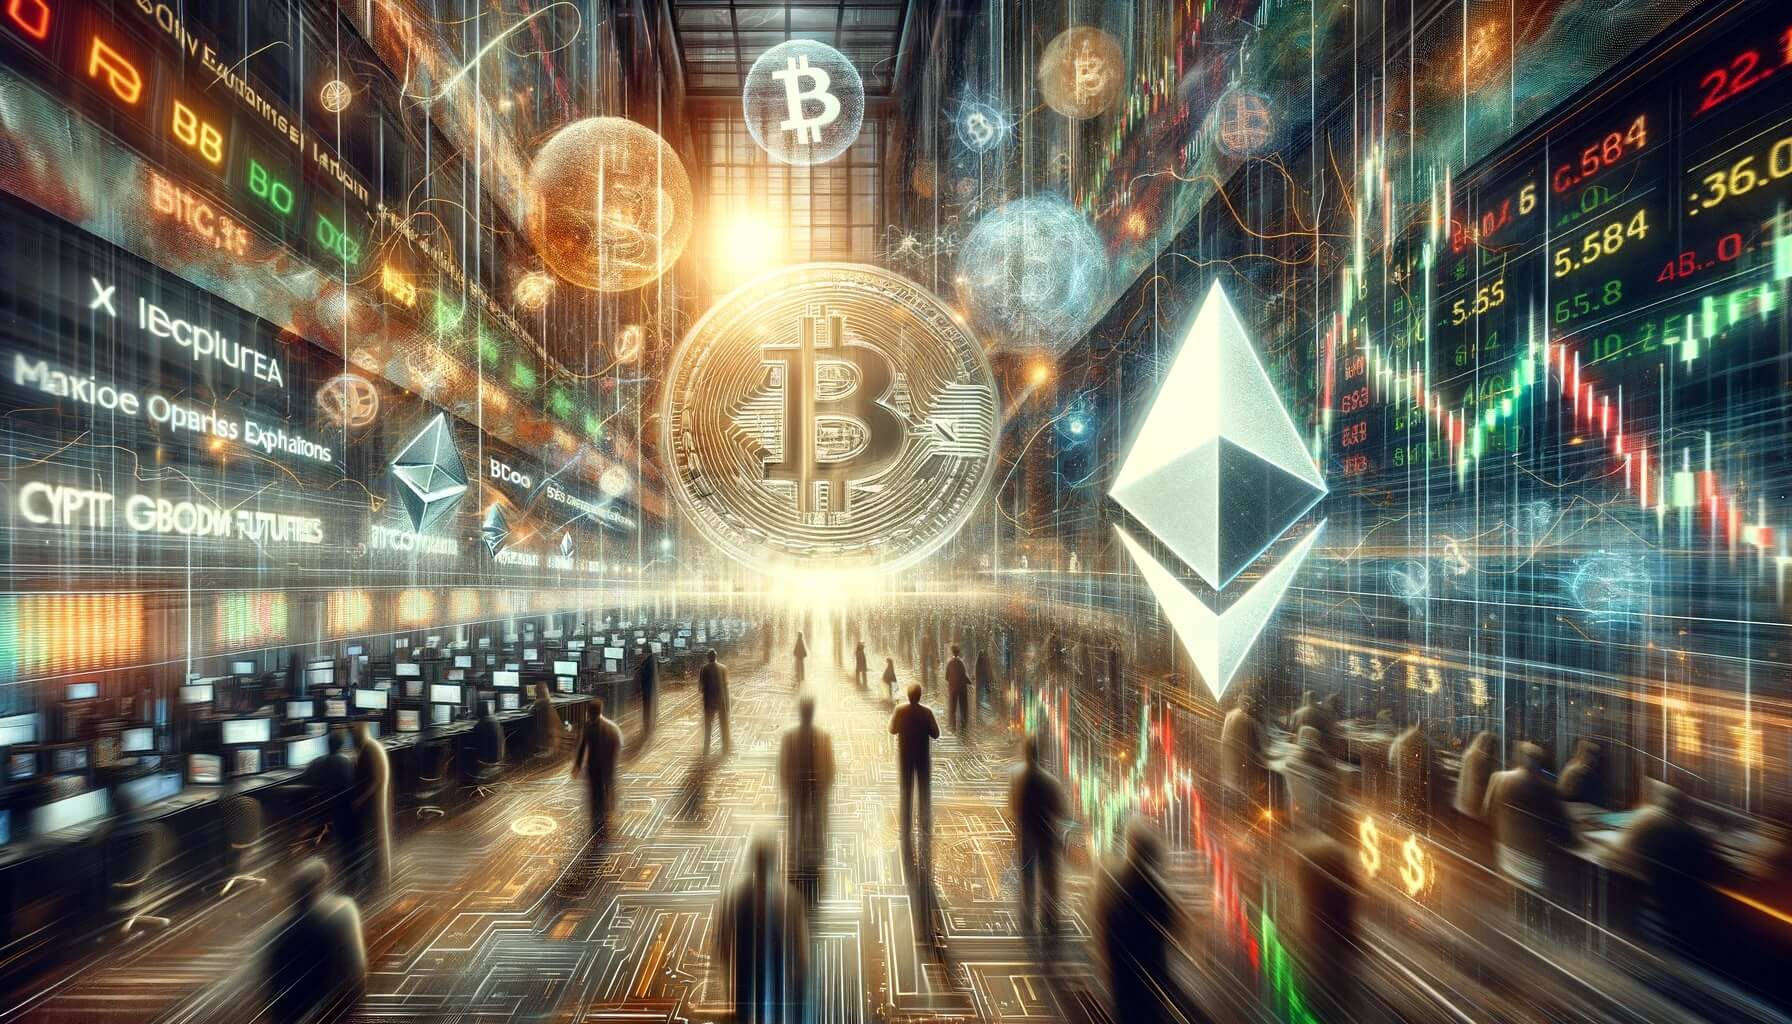  futures ethereum cboe bitcoin digital trading allow 